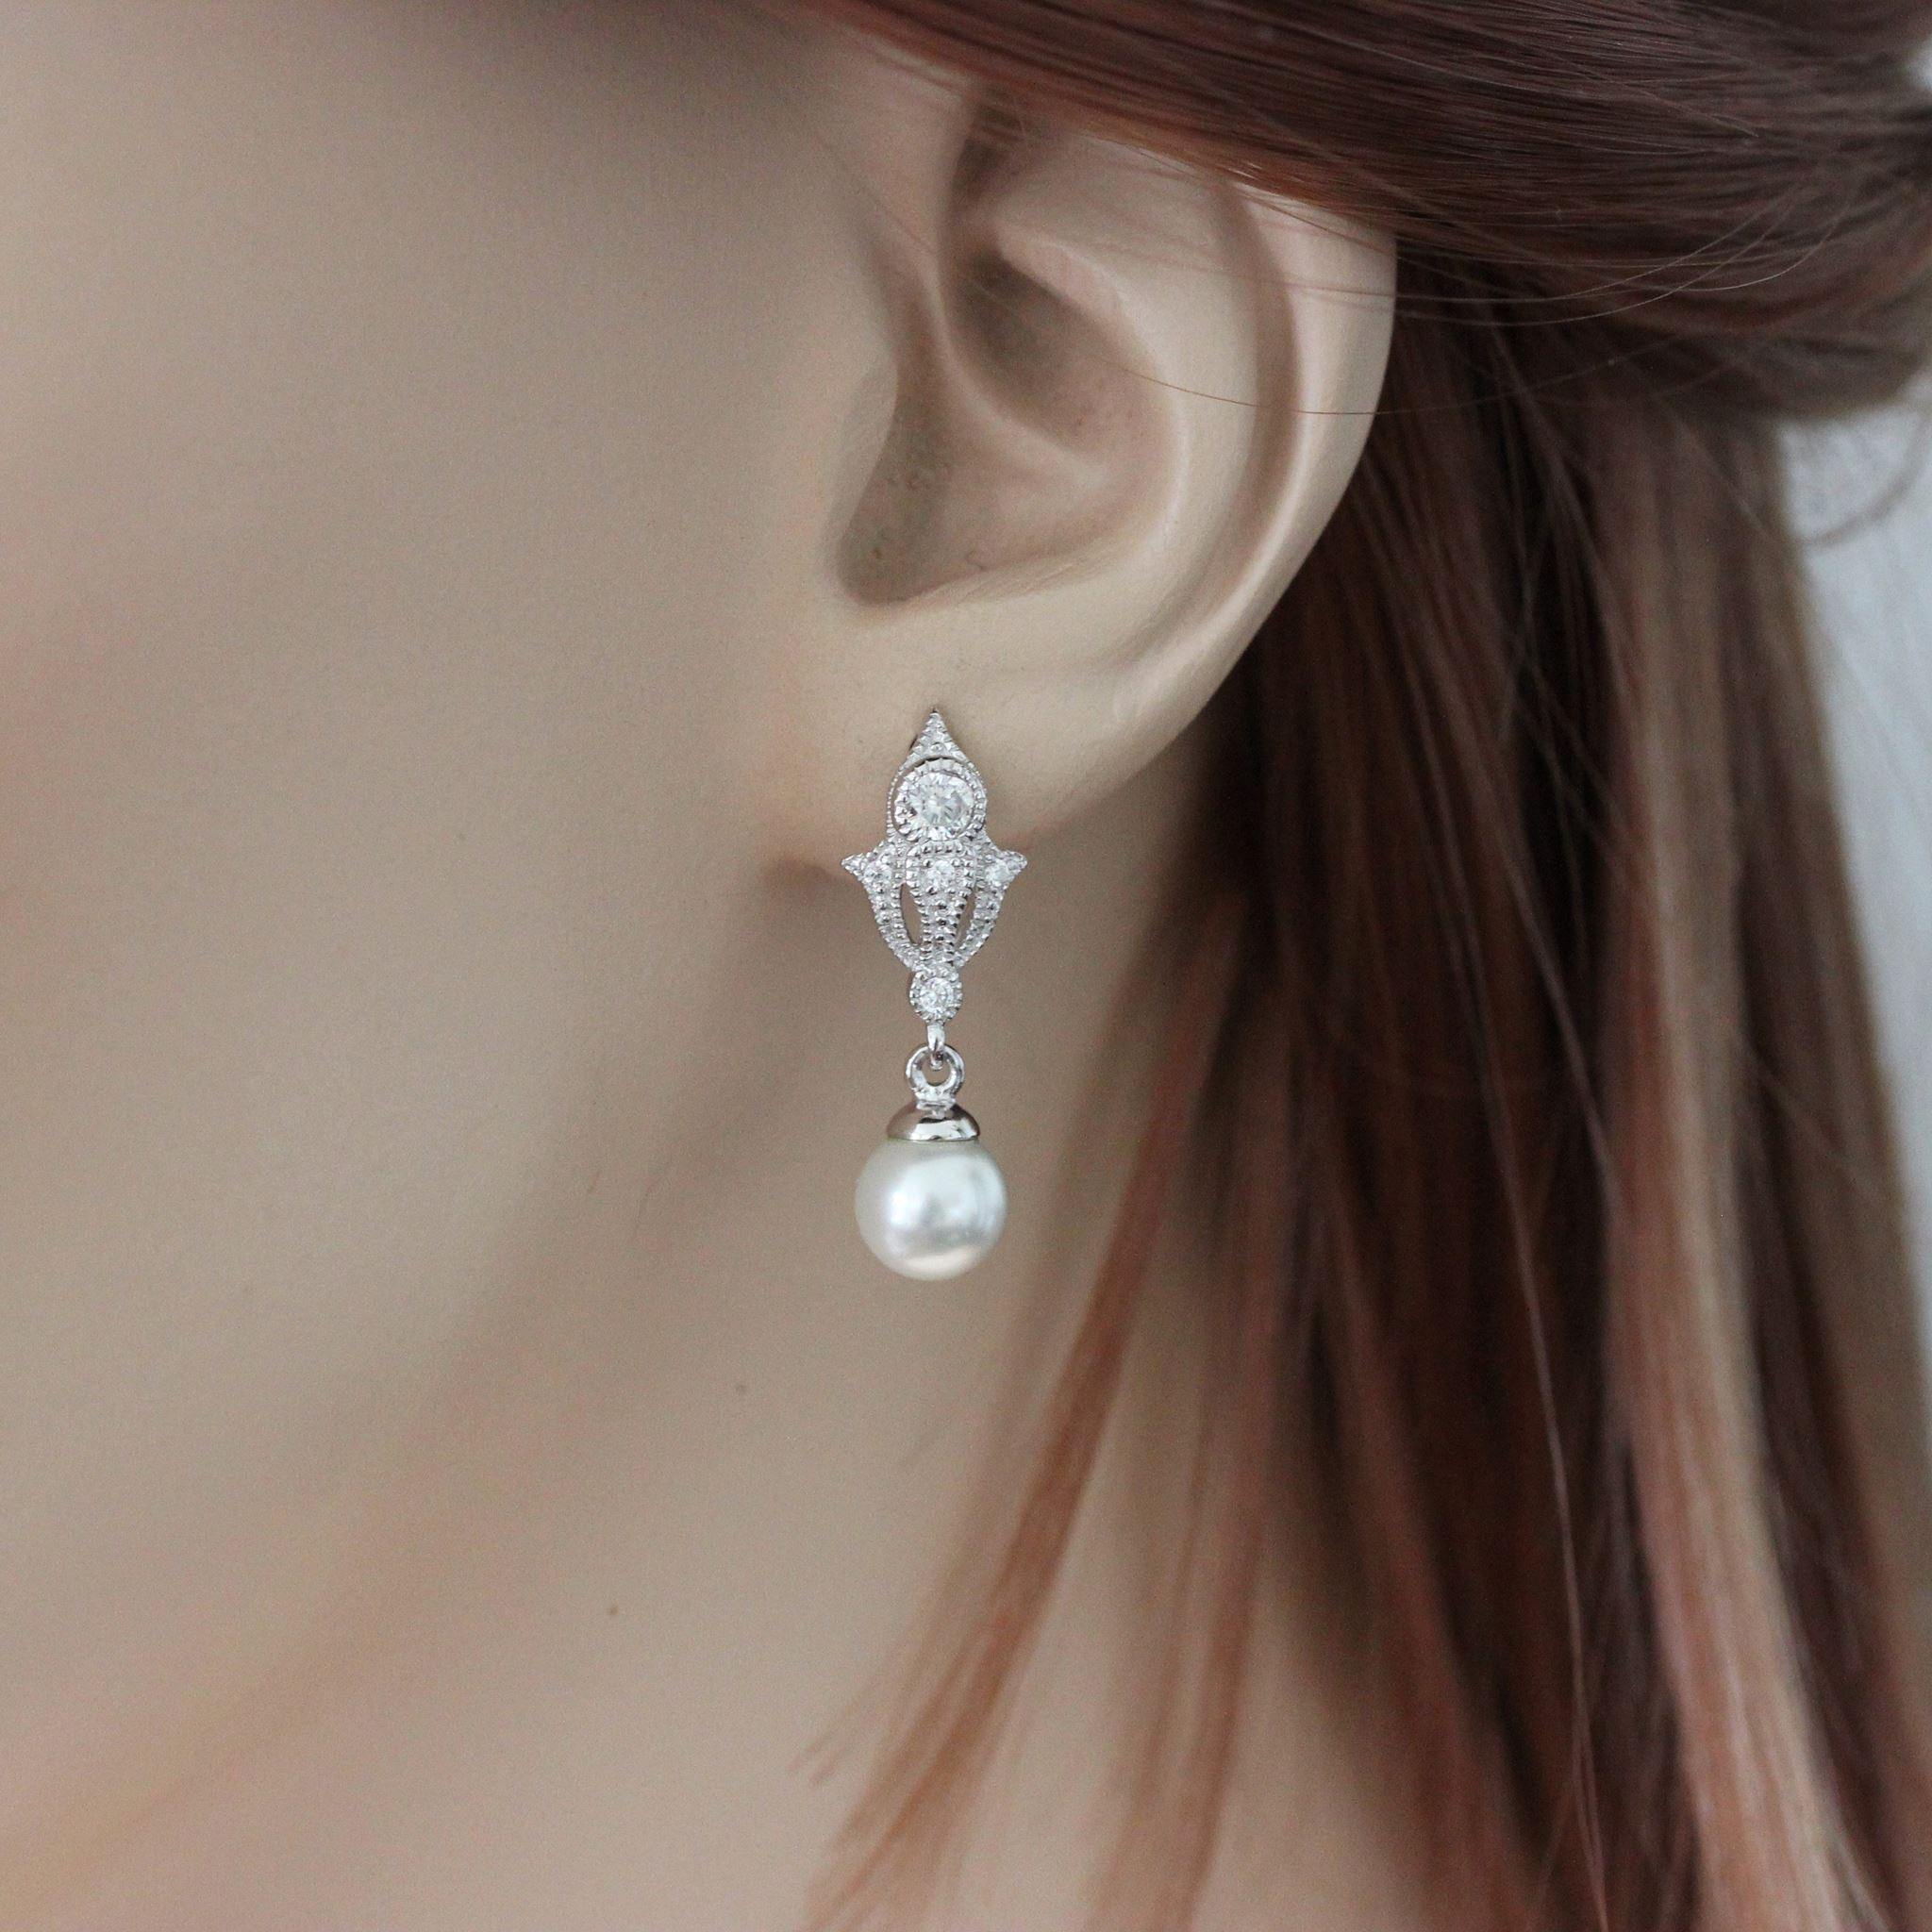 Sterling Silver Art Deco Style Bridal Wedding Pearl & CZ Drop Earrings - STERLING SILVER DESIGNS